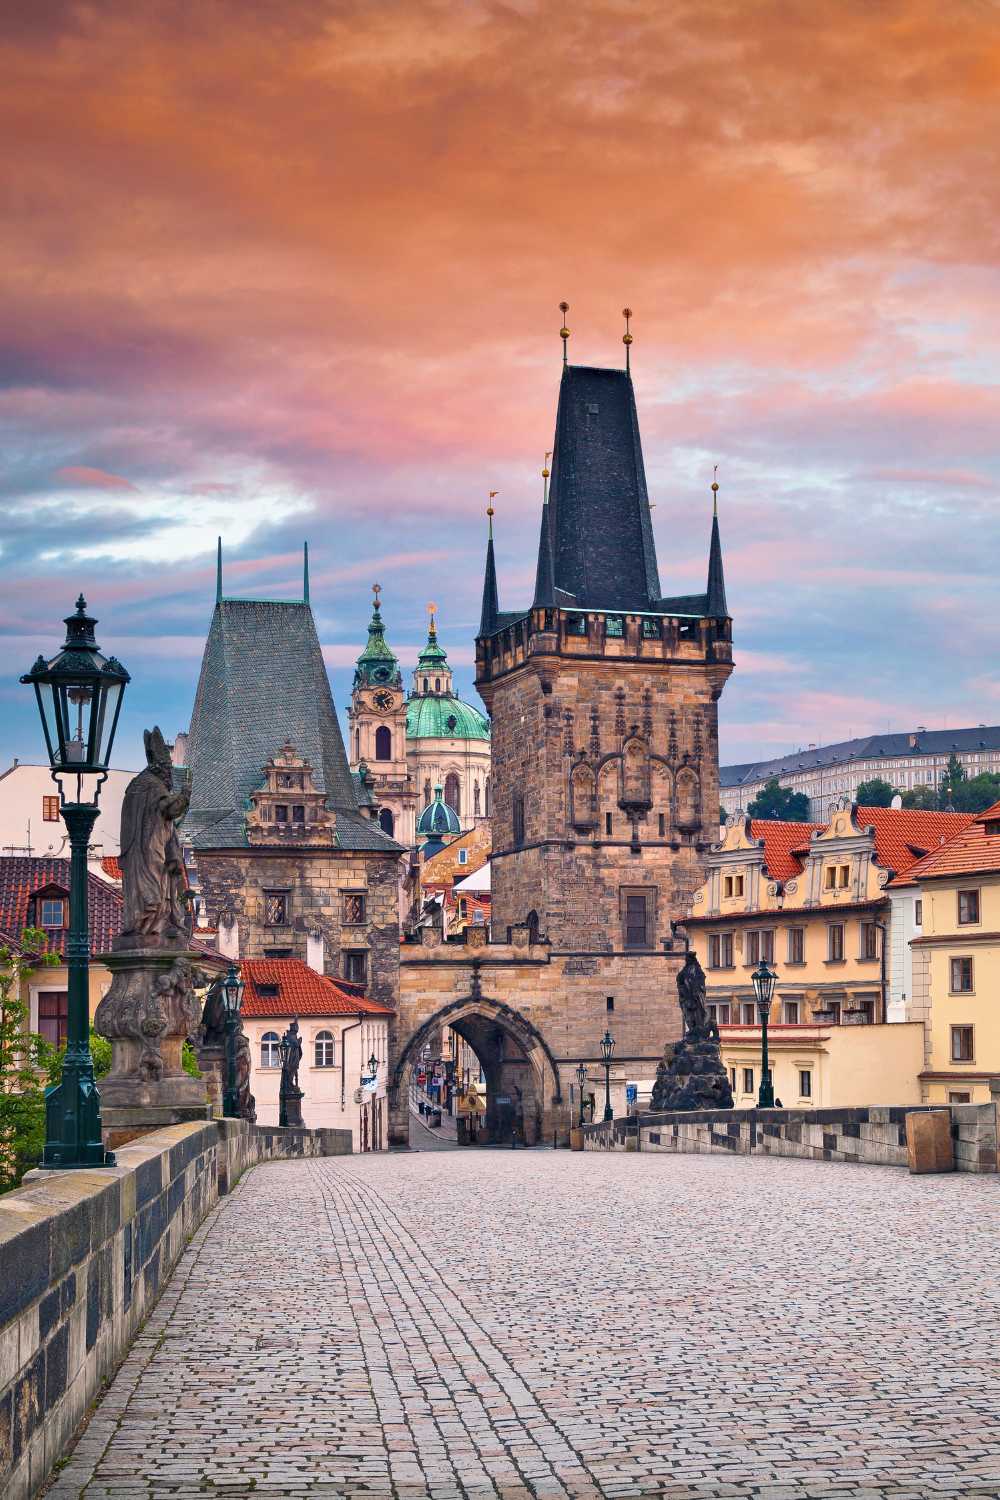 Most Traveled European Cities, Prague